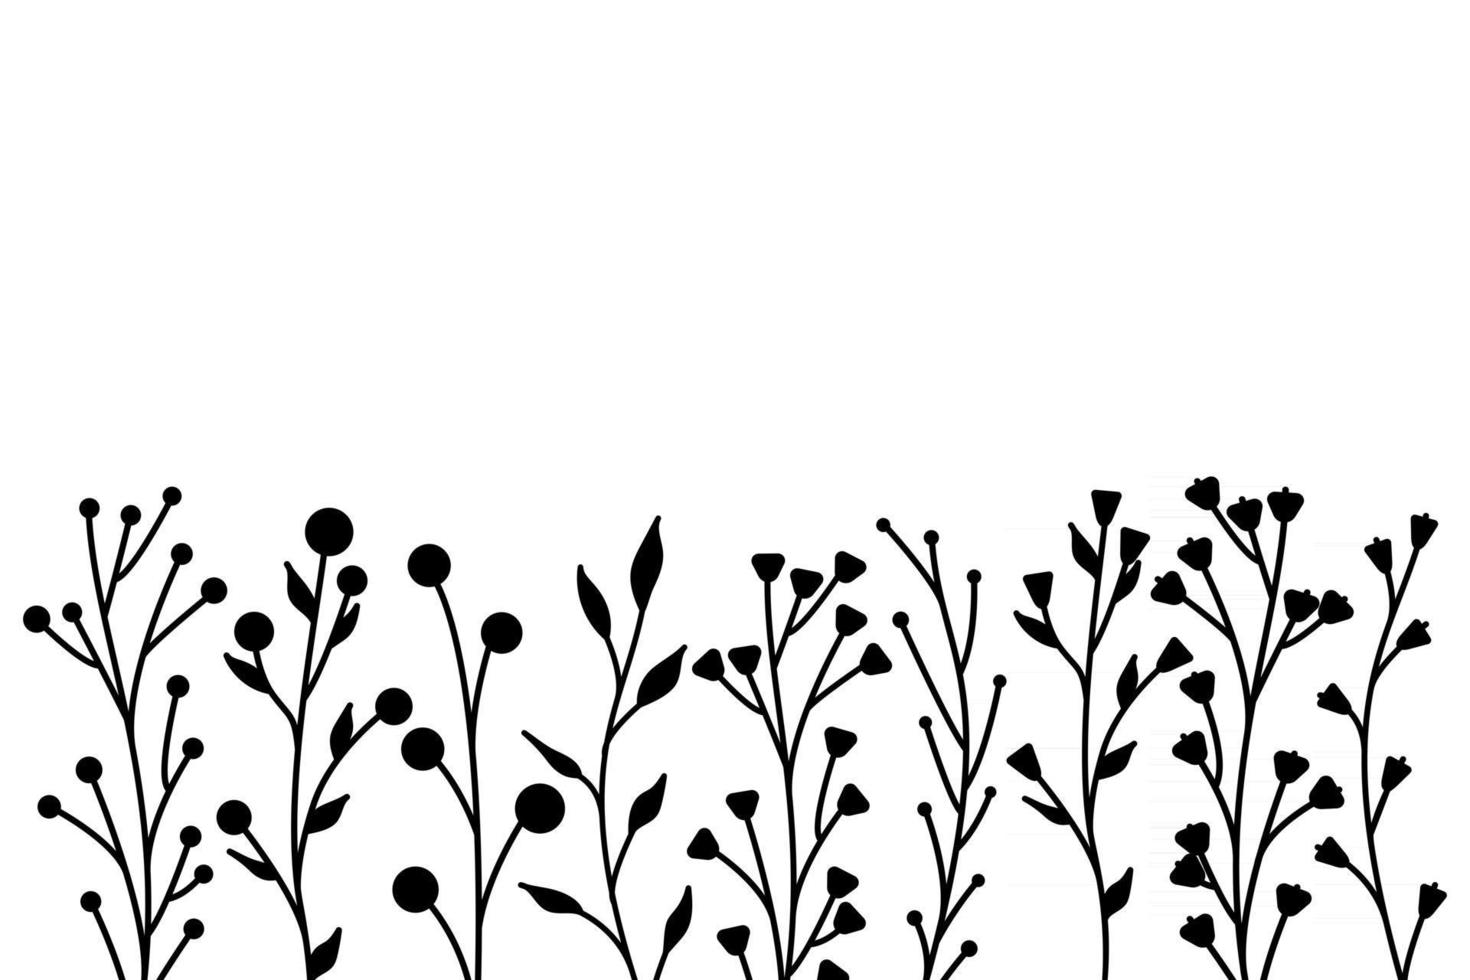 silhuetas negras de grama, flores e ervas, elementos florais simples minimalistas vetor